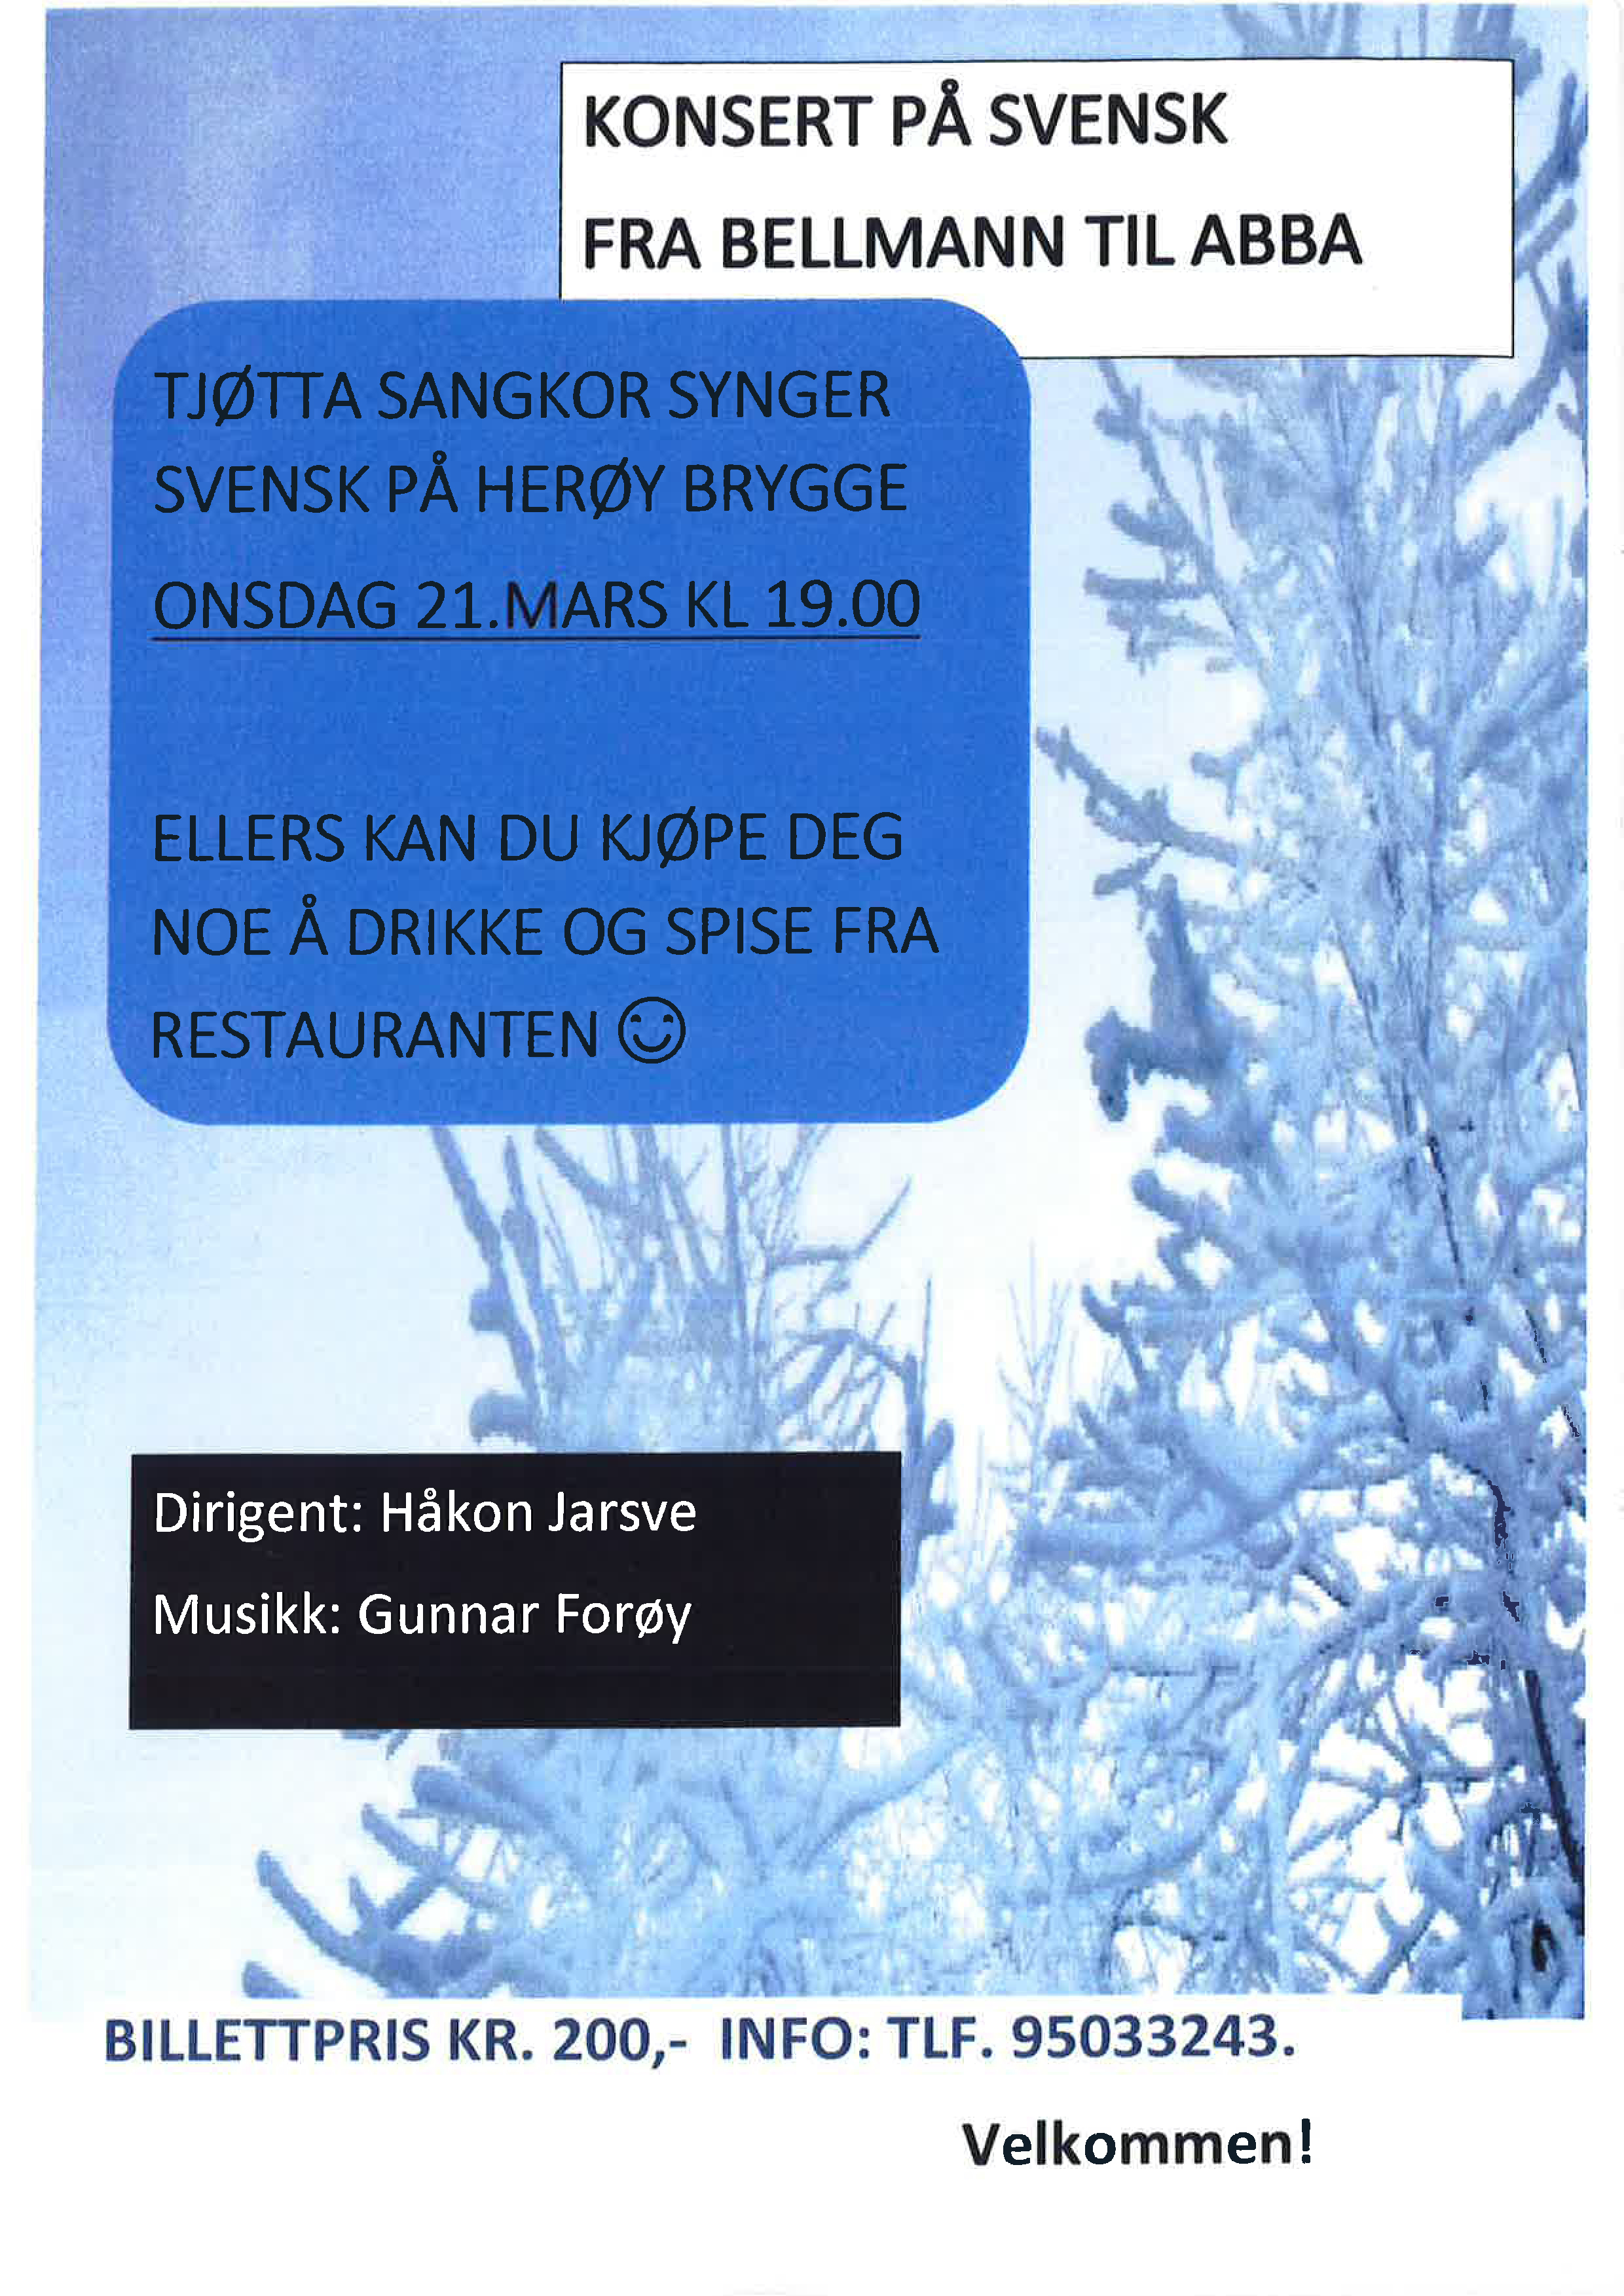 Konsert på svensk med Tjøtta sangkor mars 2018.jpg